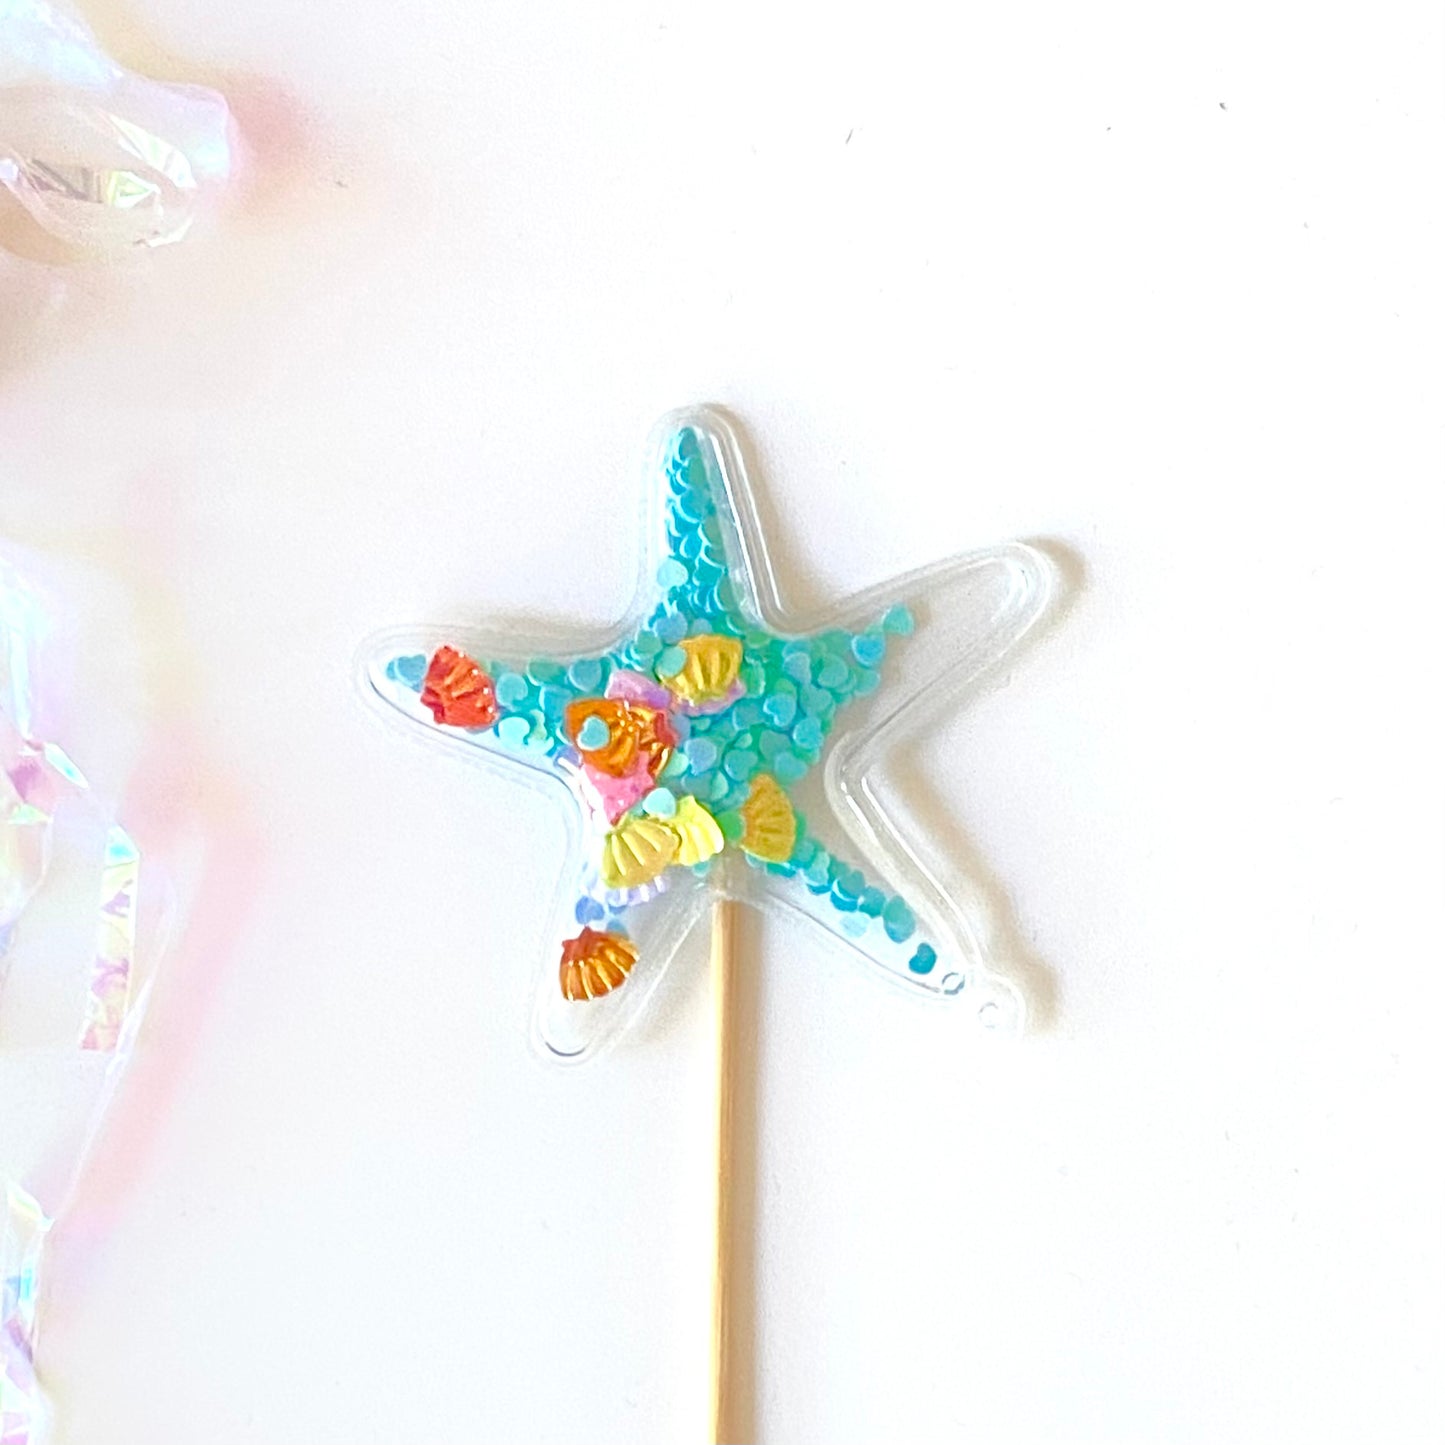 Confetti Filled PVC Cake Topper - Blue Starfish